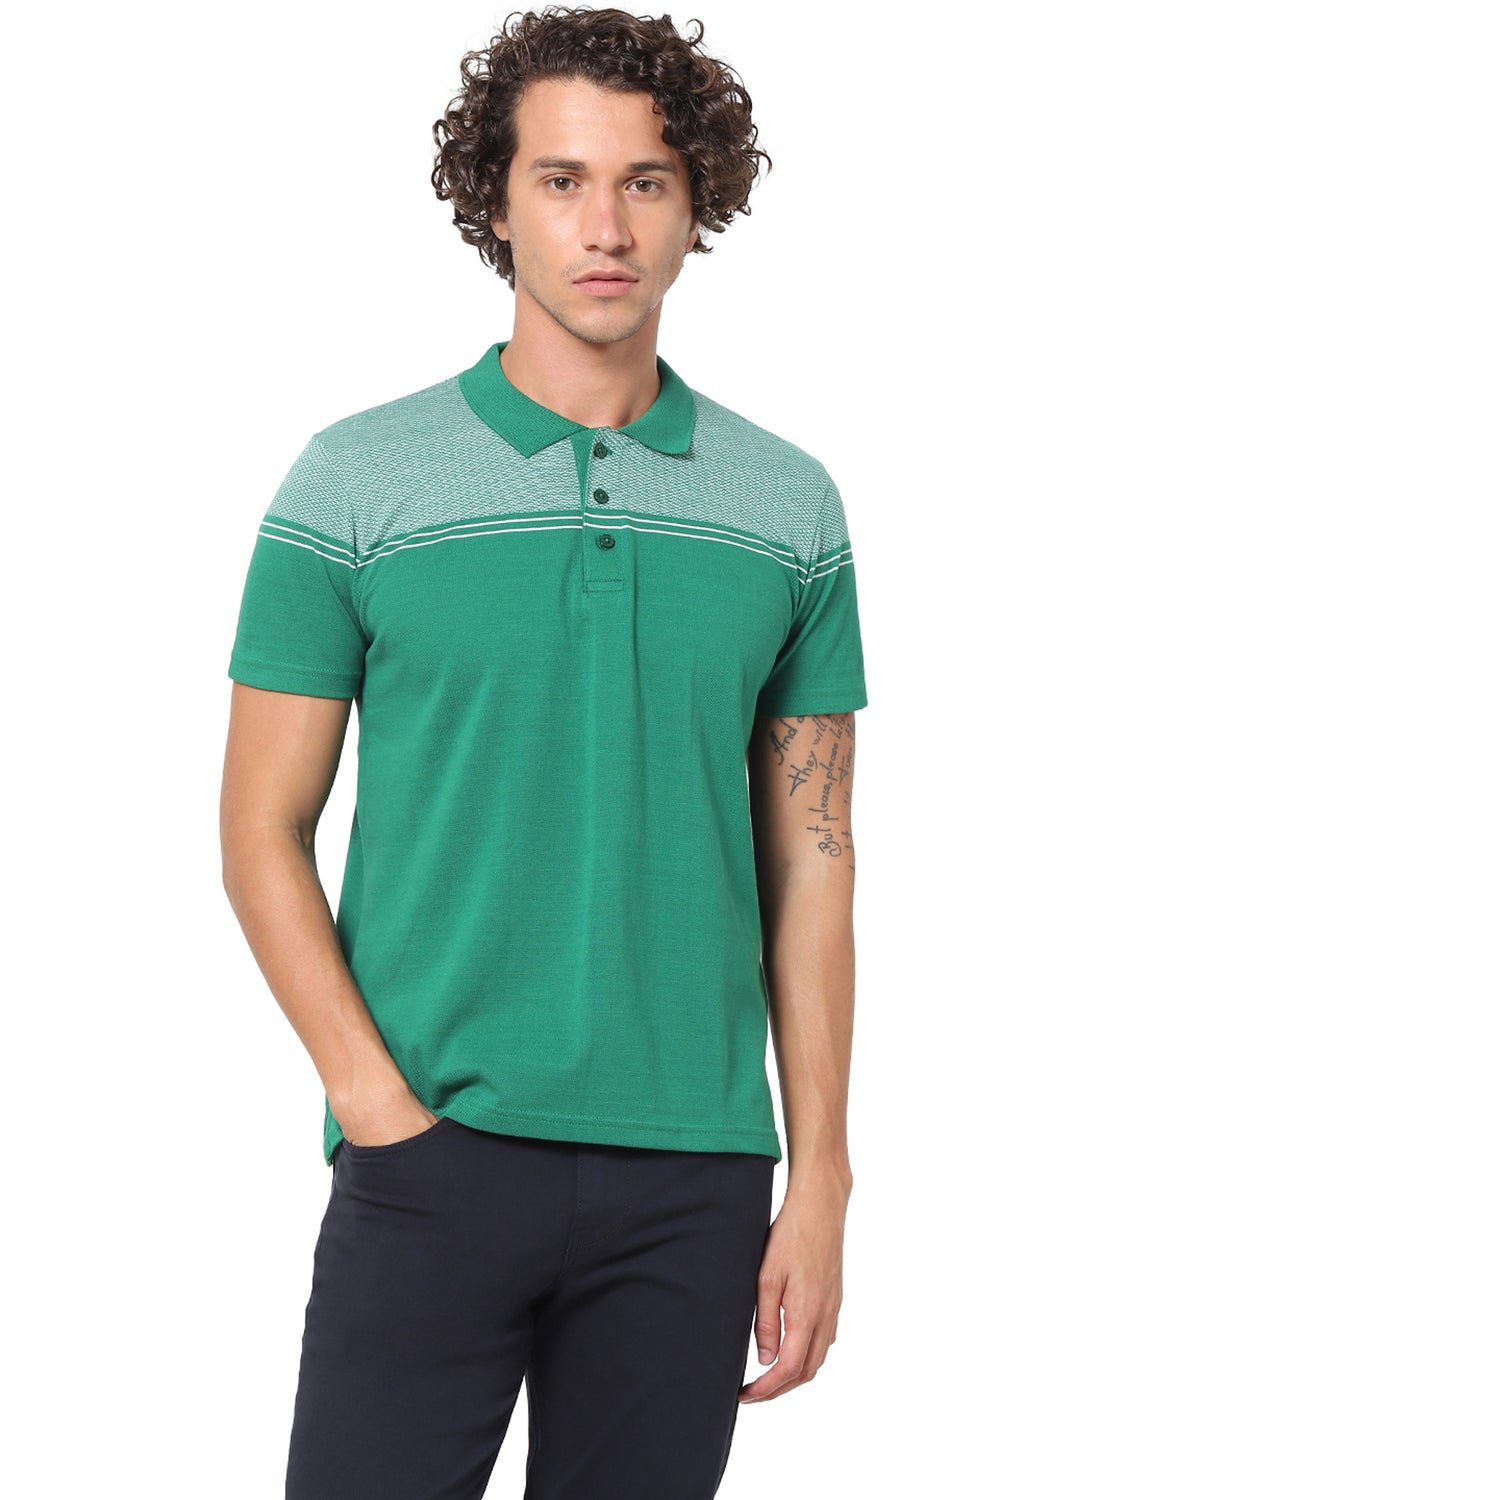 Green and White Colourblocked Polo Collar T-shirt (TEJACQ)